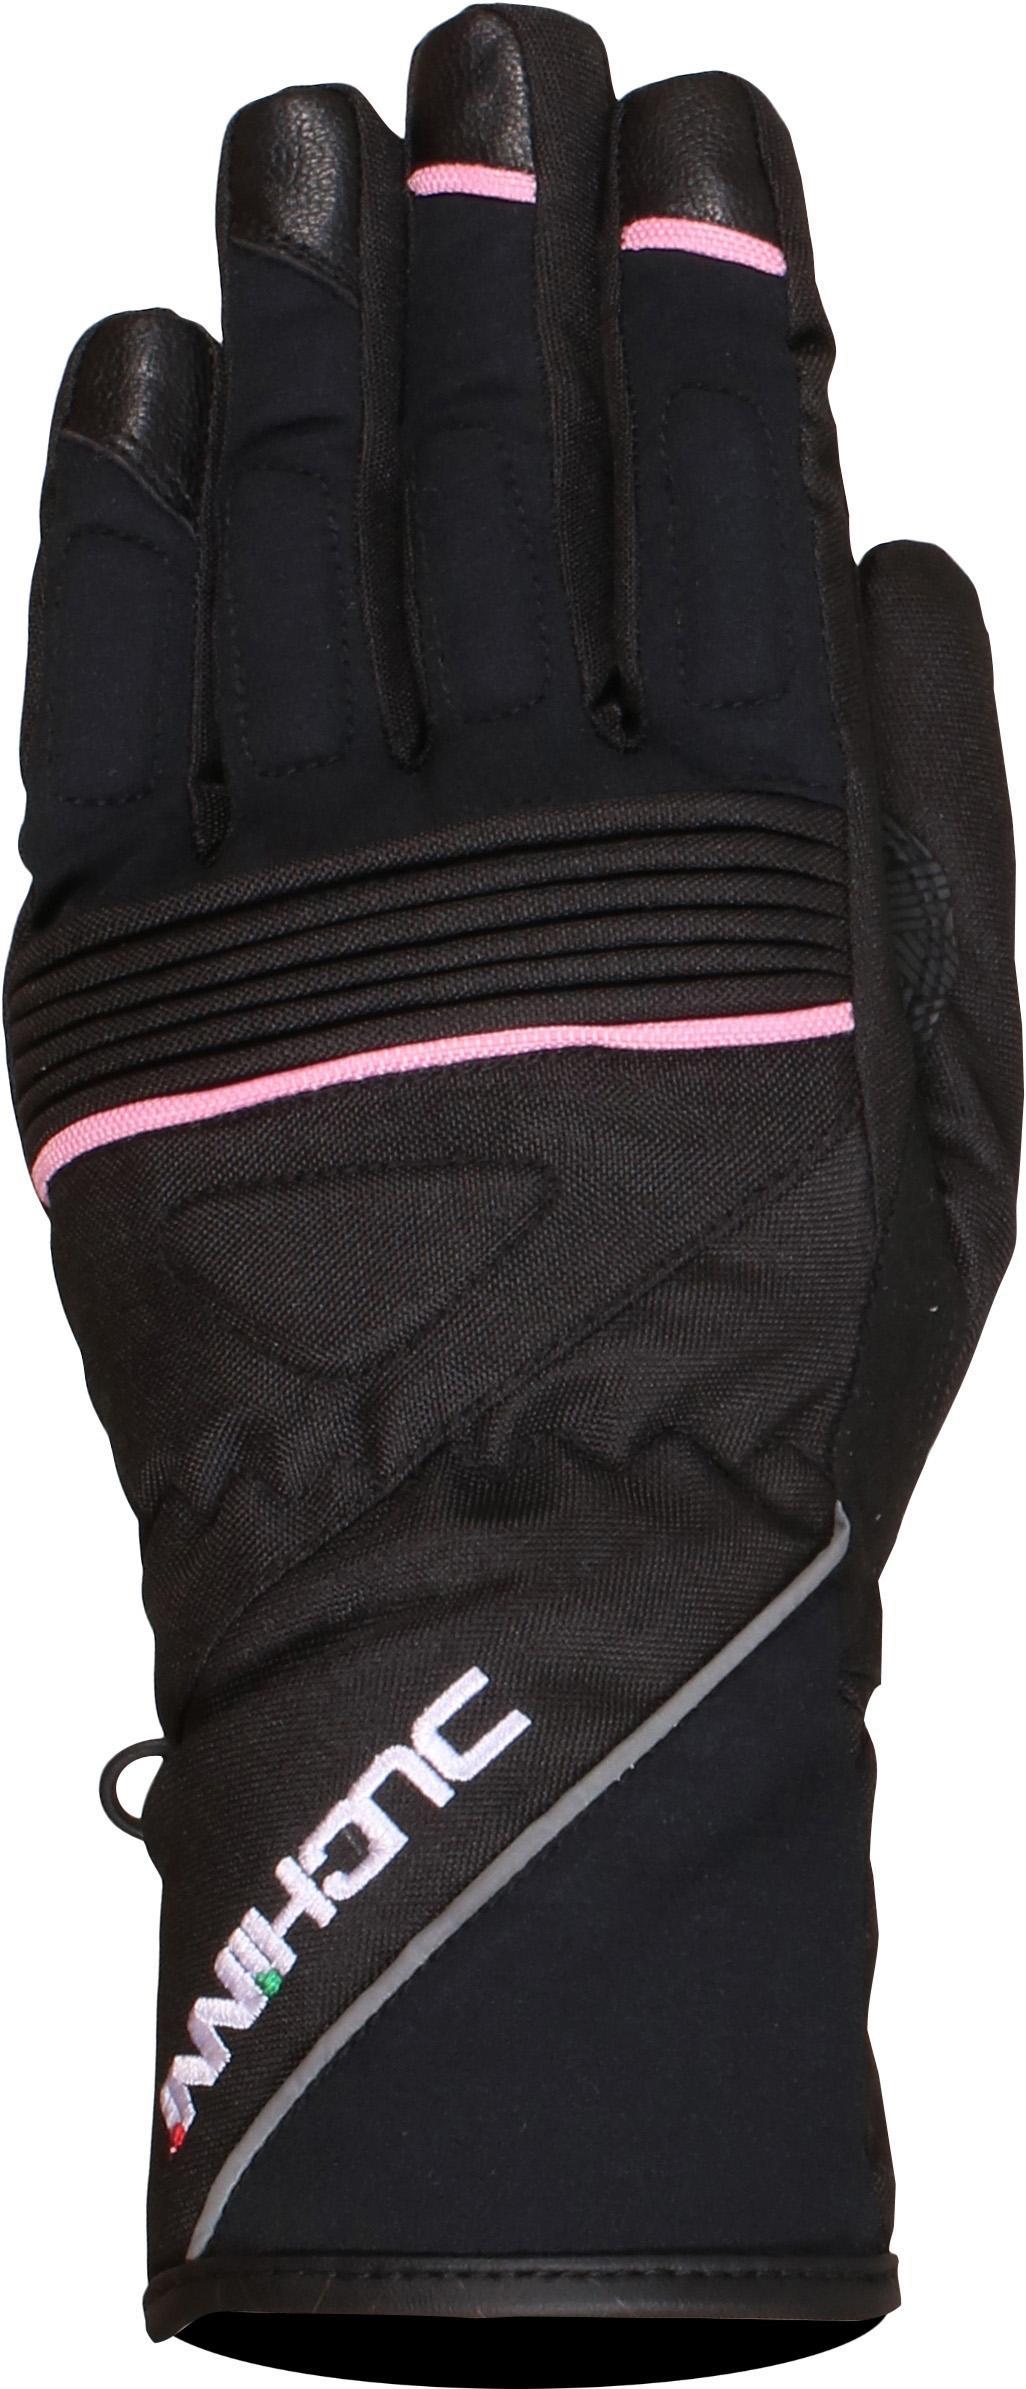 Duchinni Verona Women's Motorcycle Gloves - Black And Pink, L